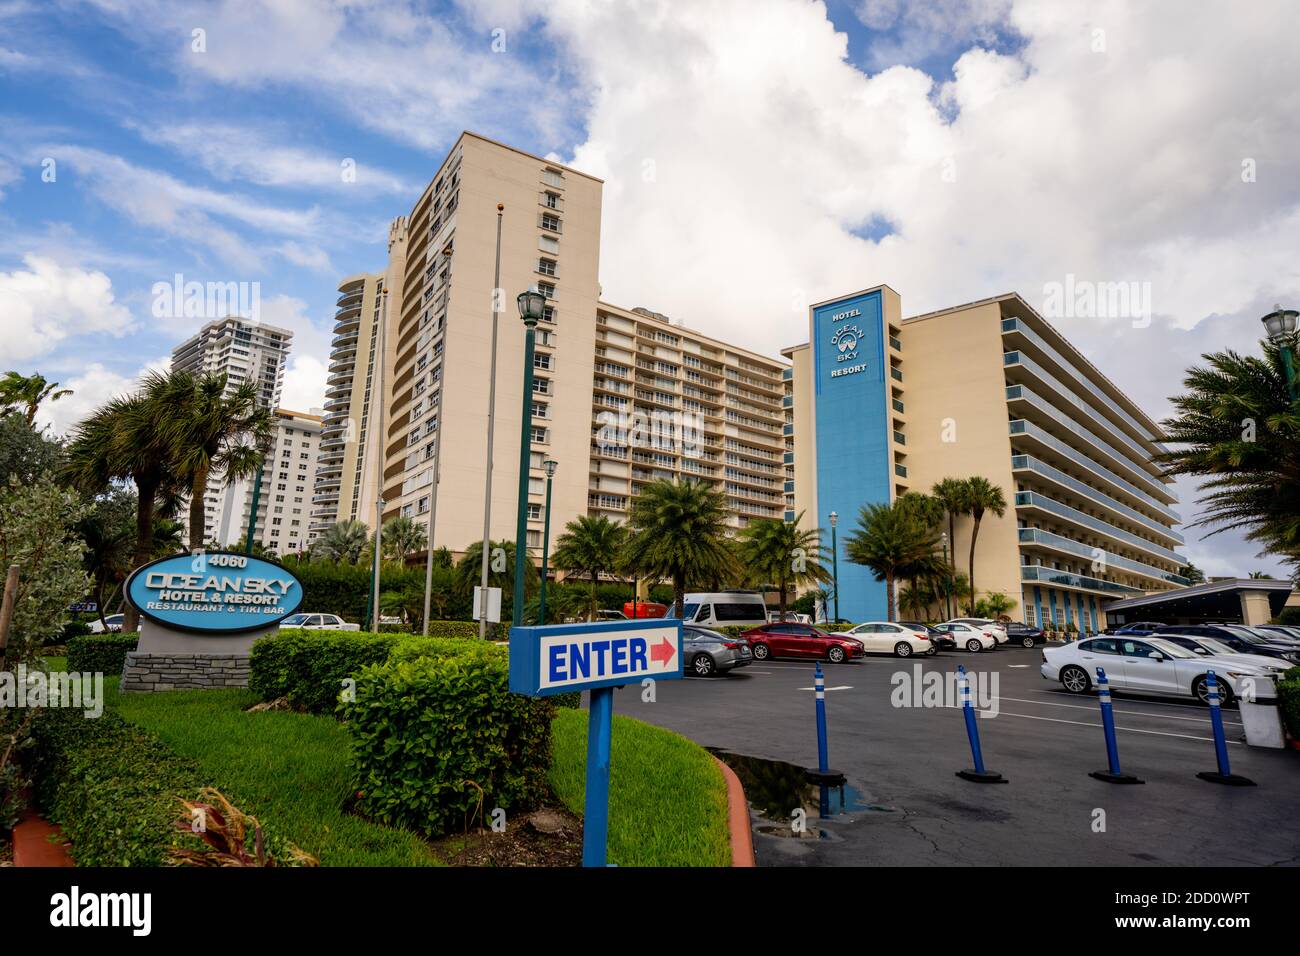 FORT LAUDERDALE, FL, USA - NOVEMBER 22, 2020: Photo of Ocean Sky Hotel and Resort Galt Ocean Mile Stock Photo